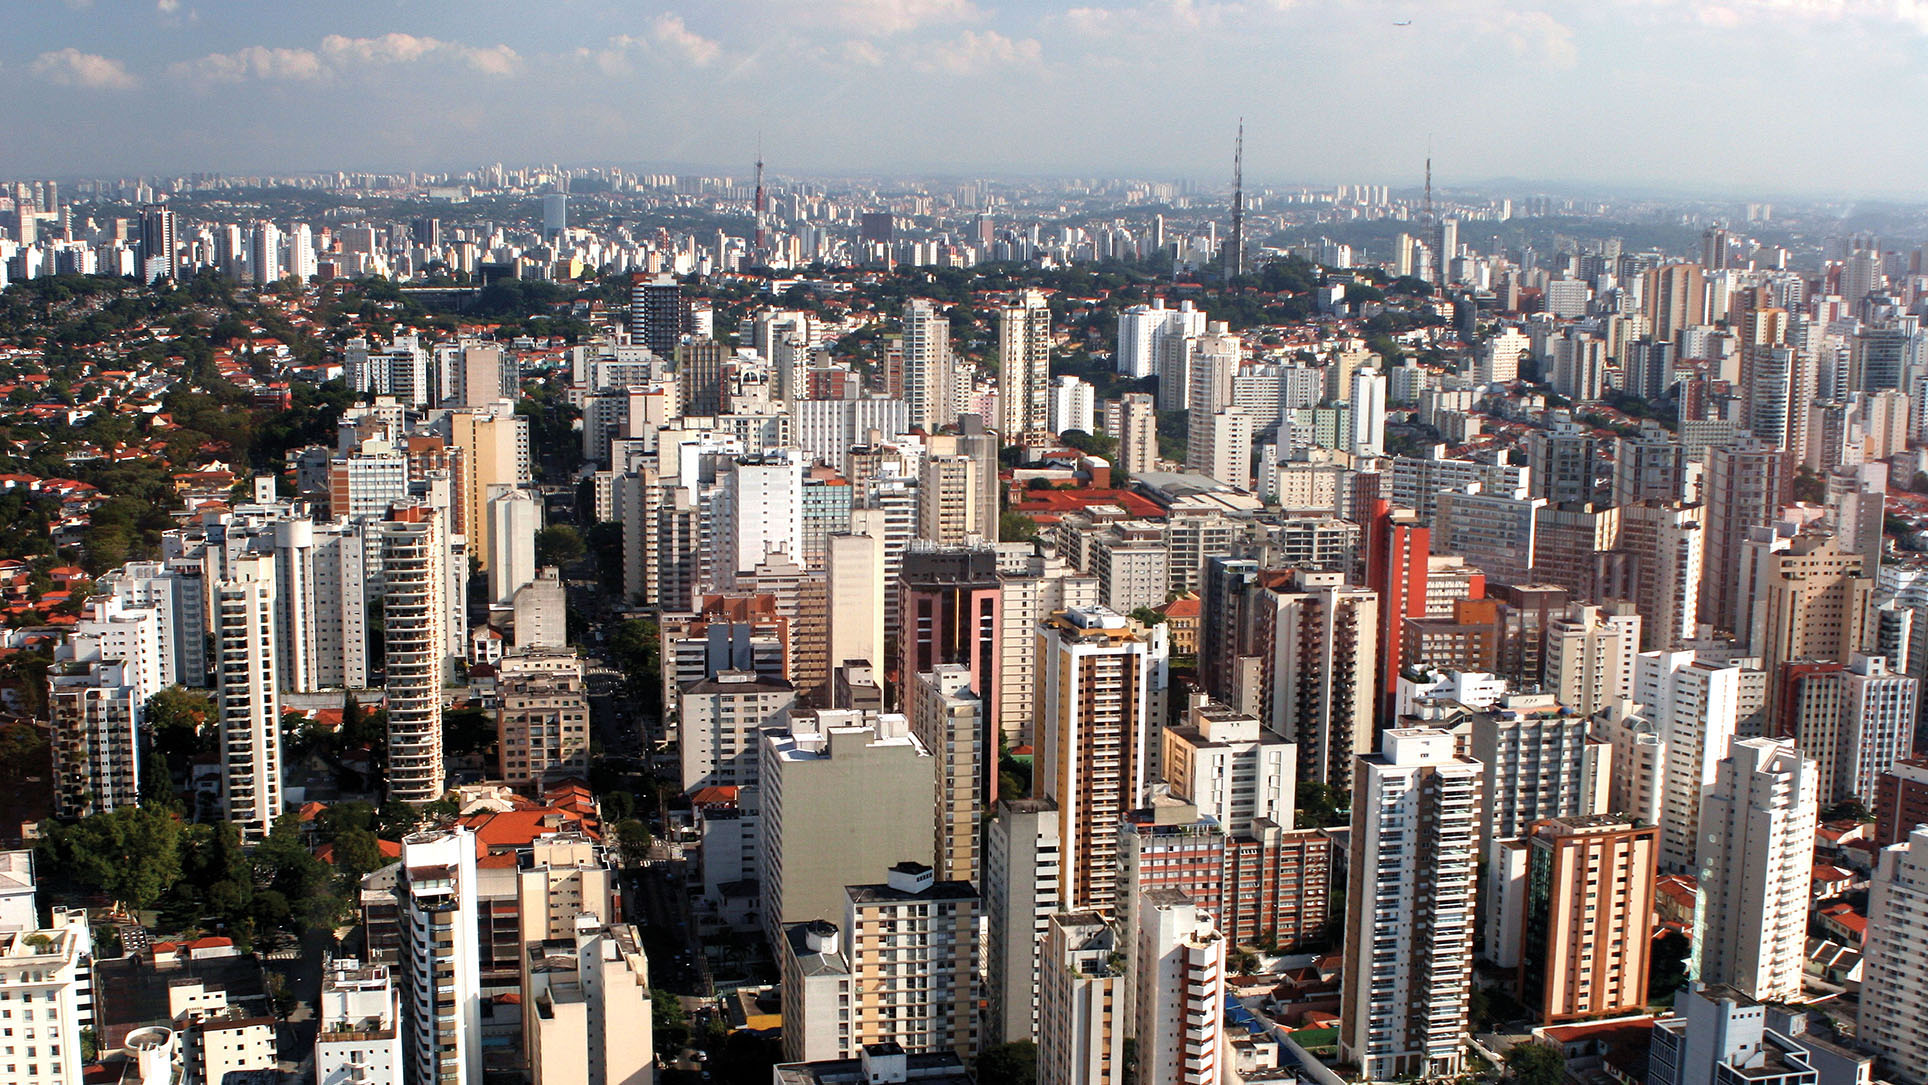 Highrise buildings march toward the horizon as part of the vast cityscape of São Paulo. (Photo by Ana Paula Hirama.)